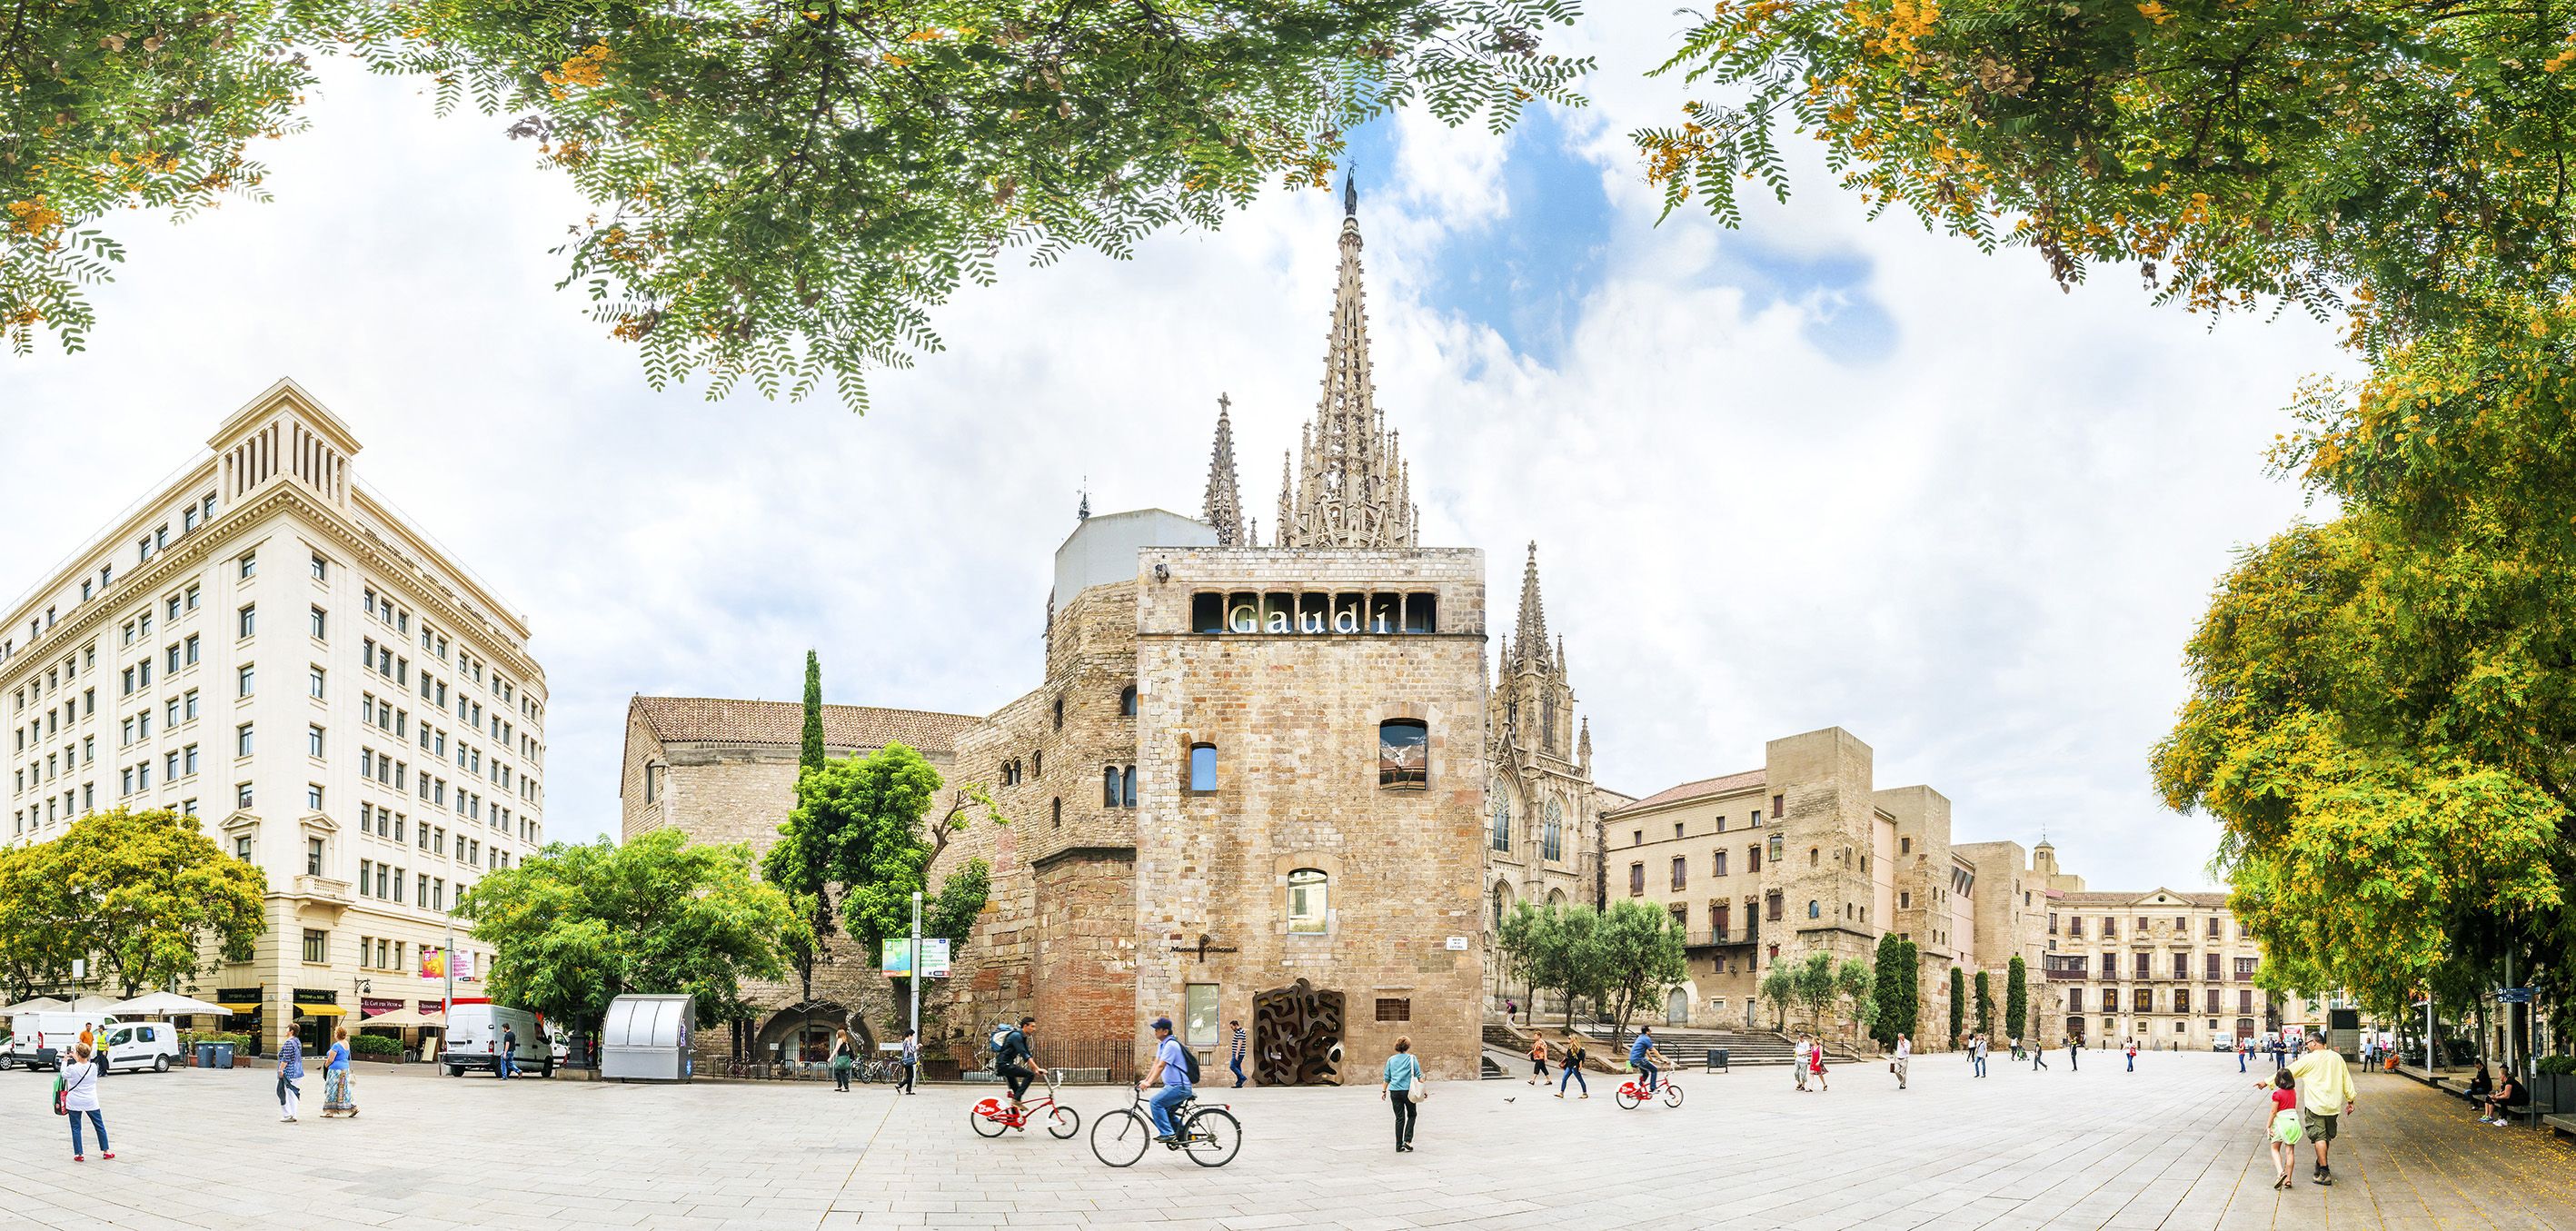 Gaudí Exhibition Centre, Museum, Barcelona